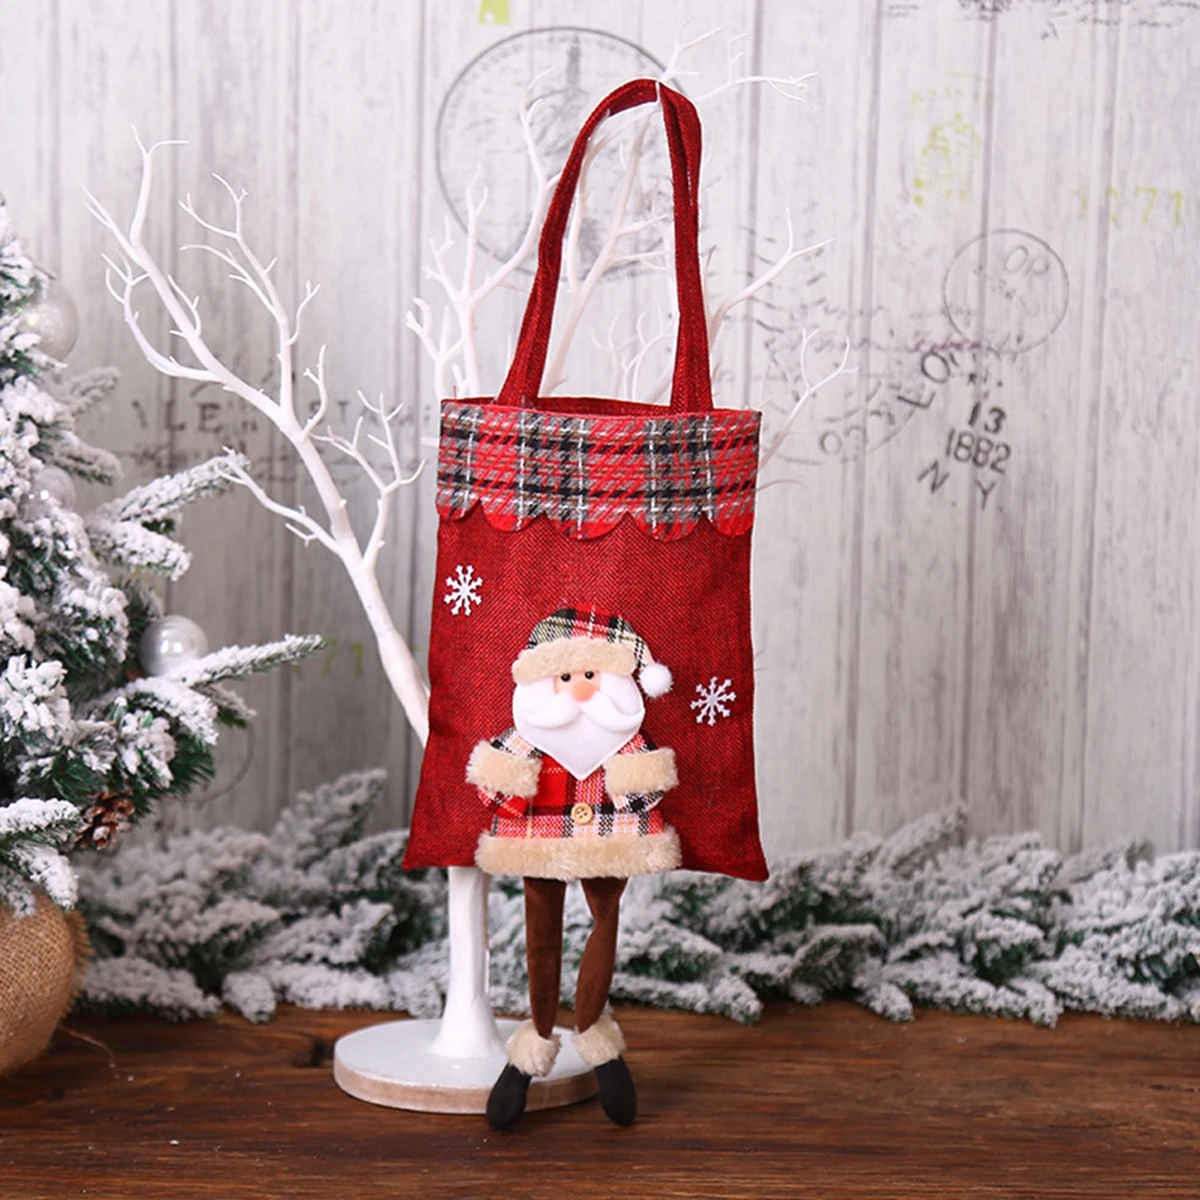 Huiran Christmas Candy Gift Bags Merry Christmas Decorations For Home Xmas Santa Claus Gift Bag Happy New Year Navidad